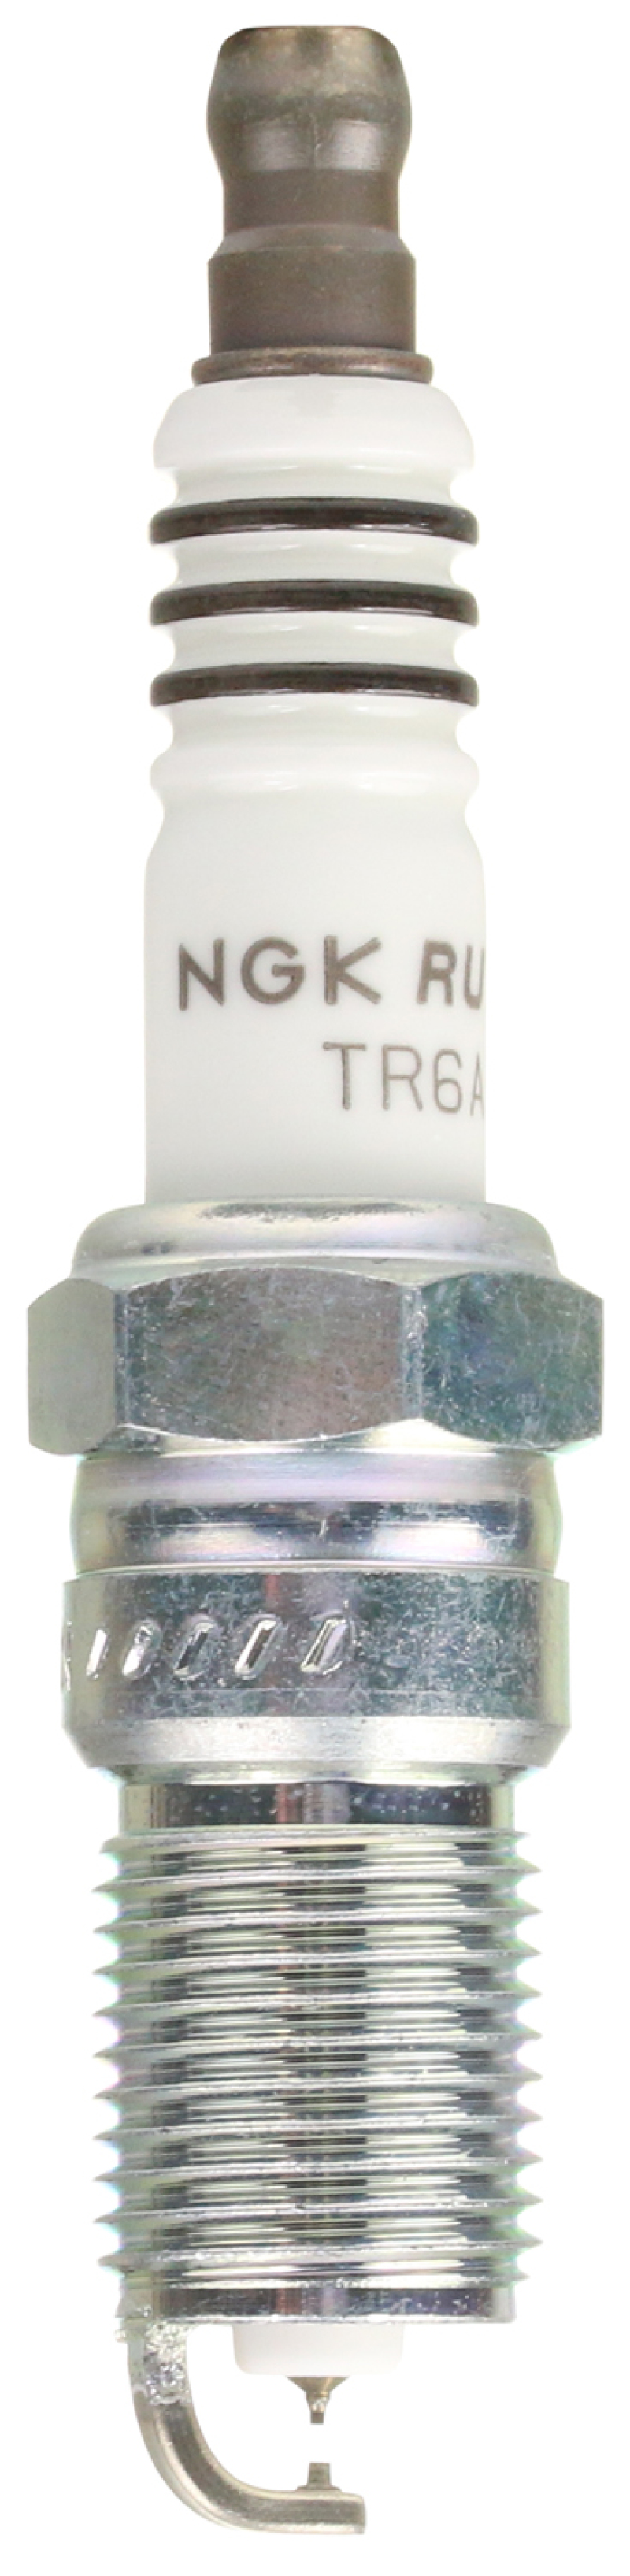 NGK Ruthenium HX Spark Plug Box of 4 (TR6AHX) - 92714